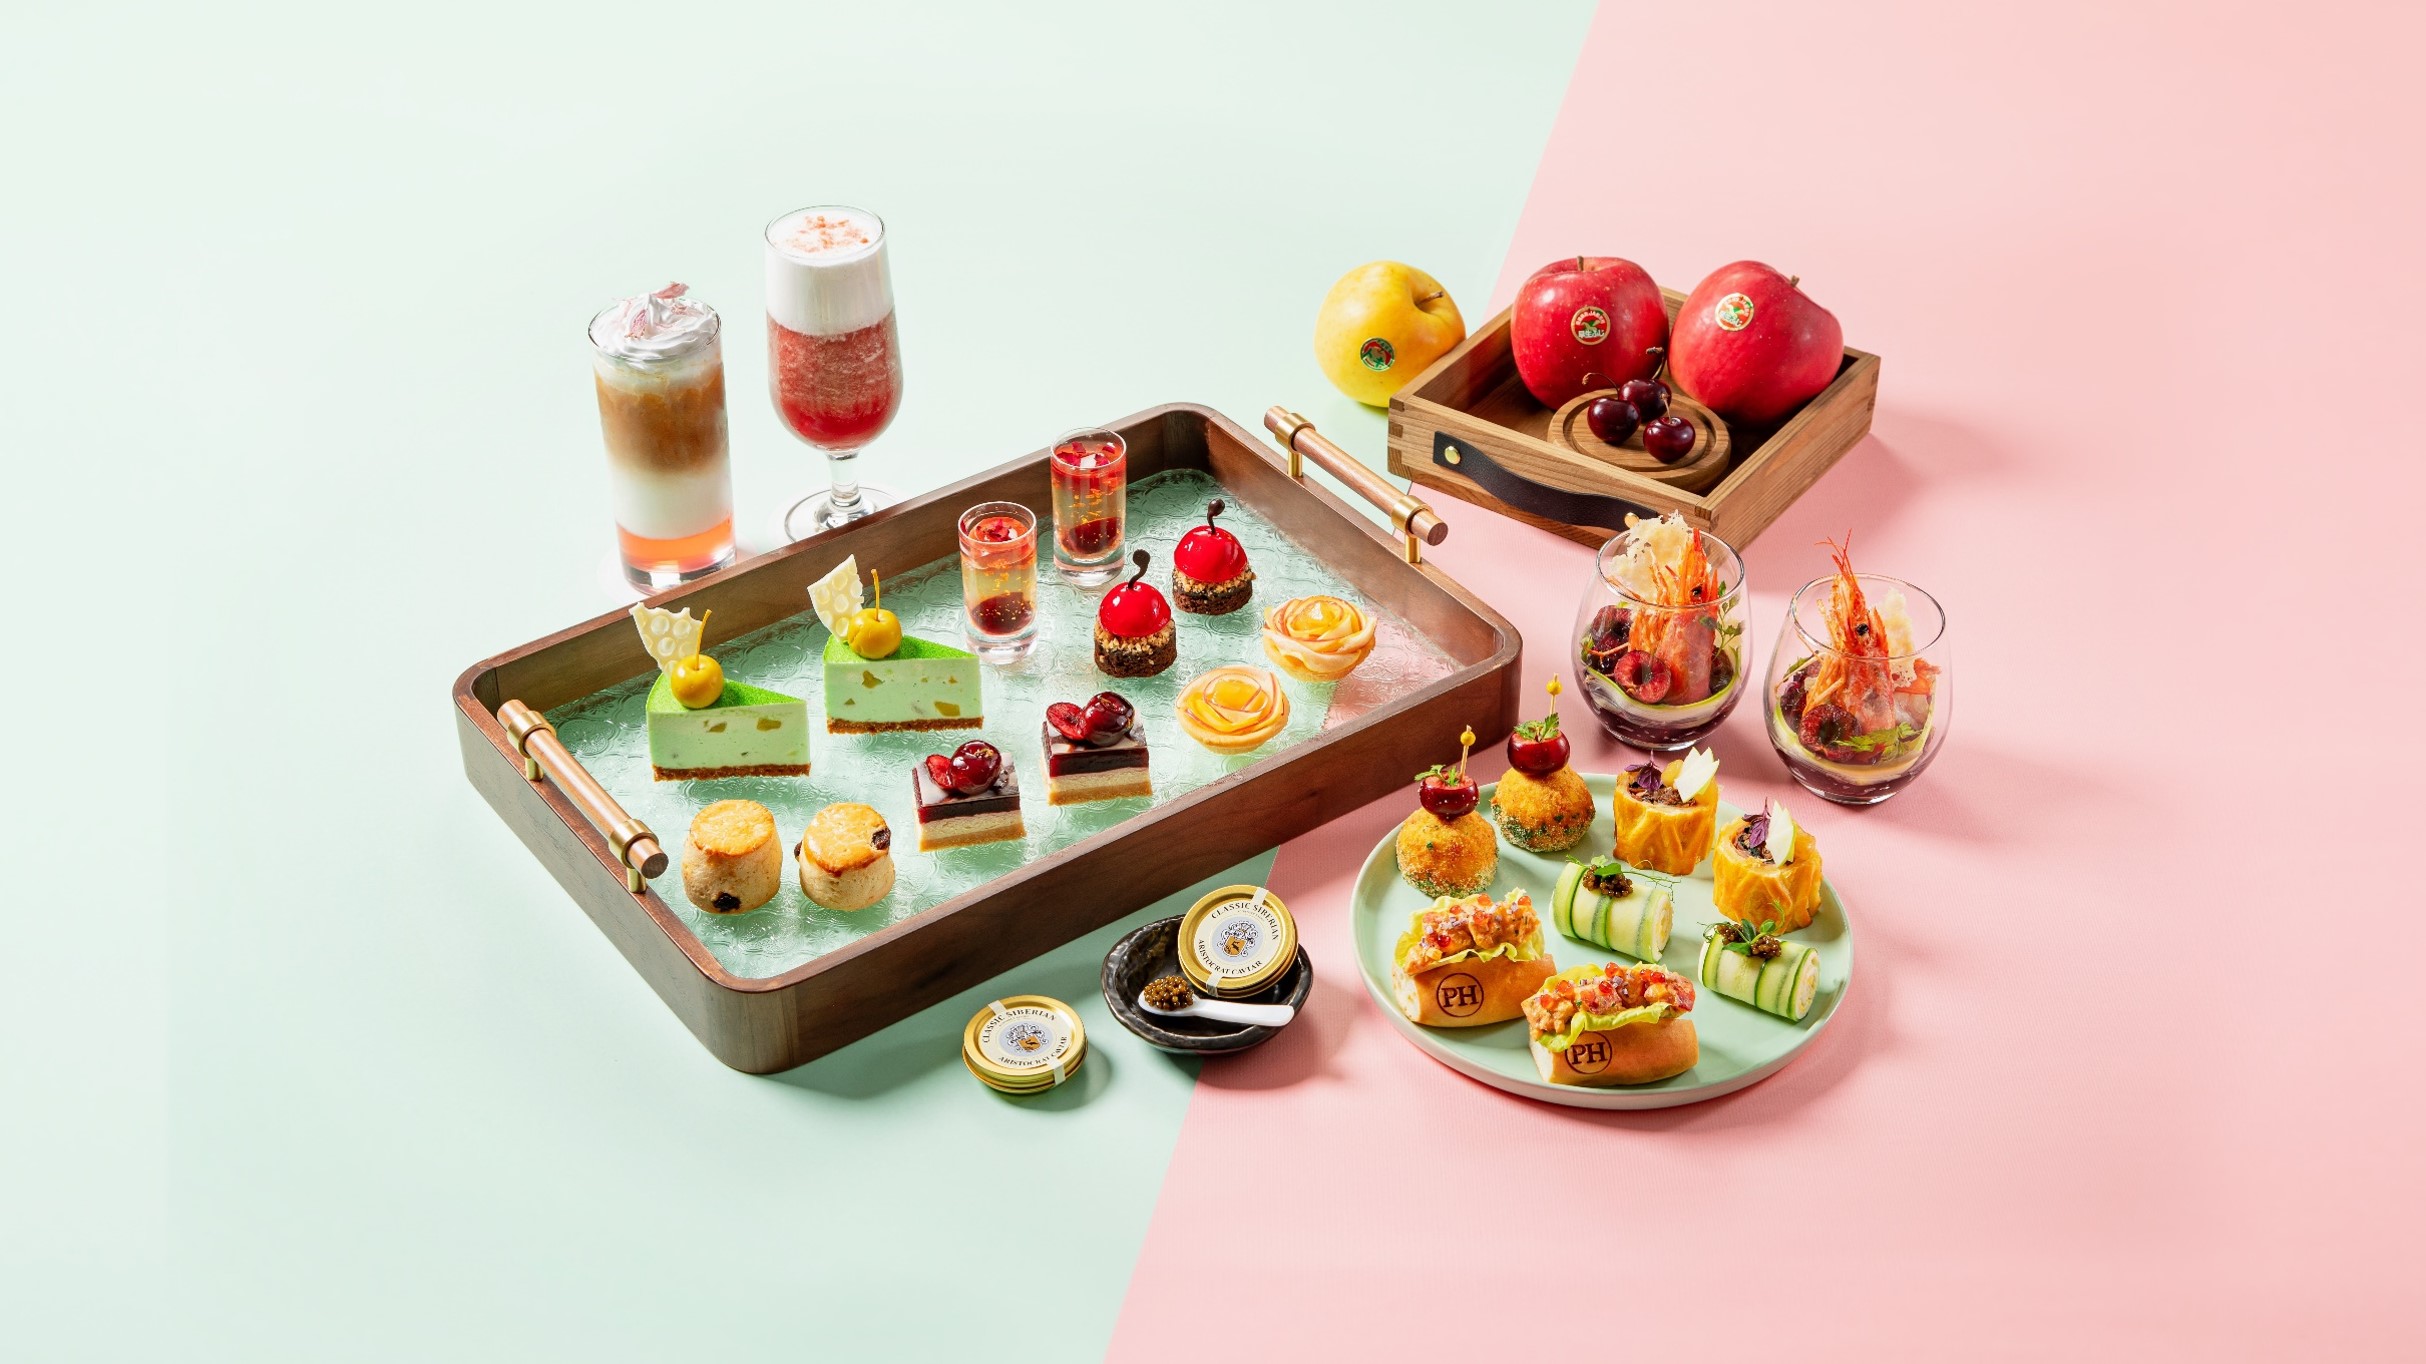 “Apple-solutely Cherryfic” Afternoon Tea Set | Park Hotel Hong Kong